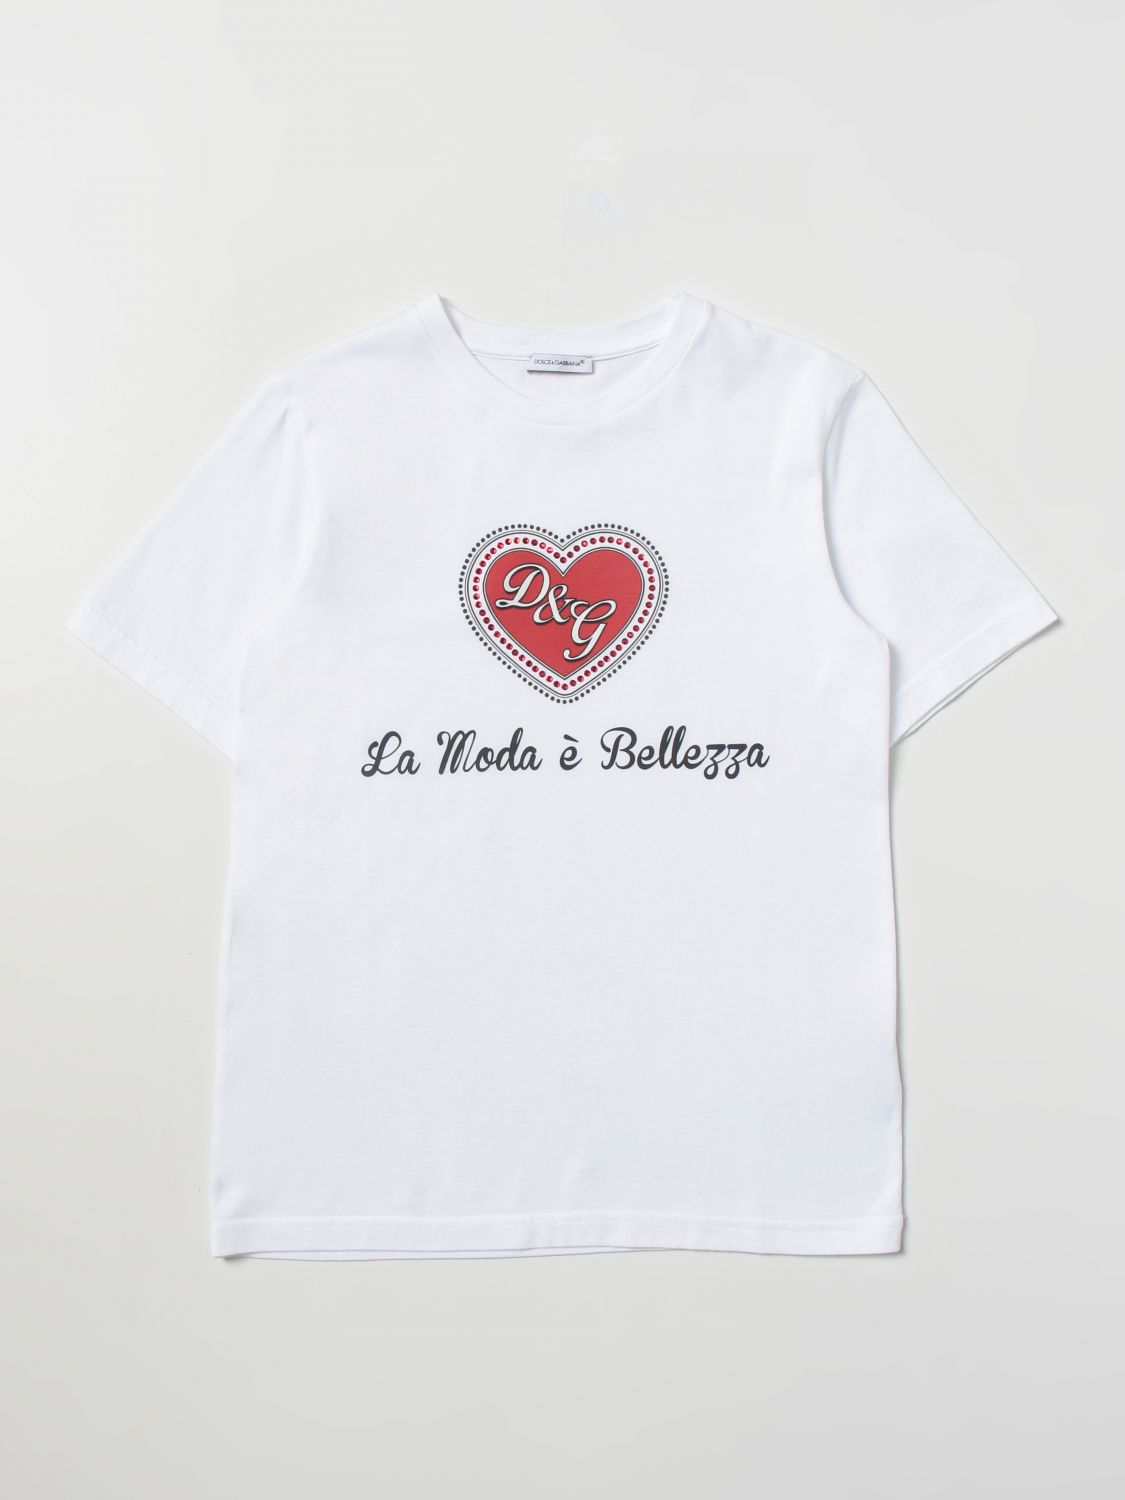 DOLCE GABBANA: Camisetas niña, Blanco Camisetas Dolce & Gabbana L5JTCGG7RYN en línea en GIGLIO.COM